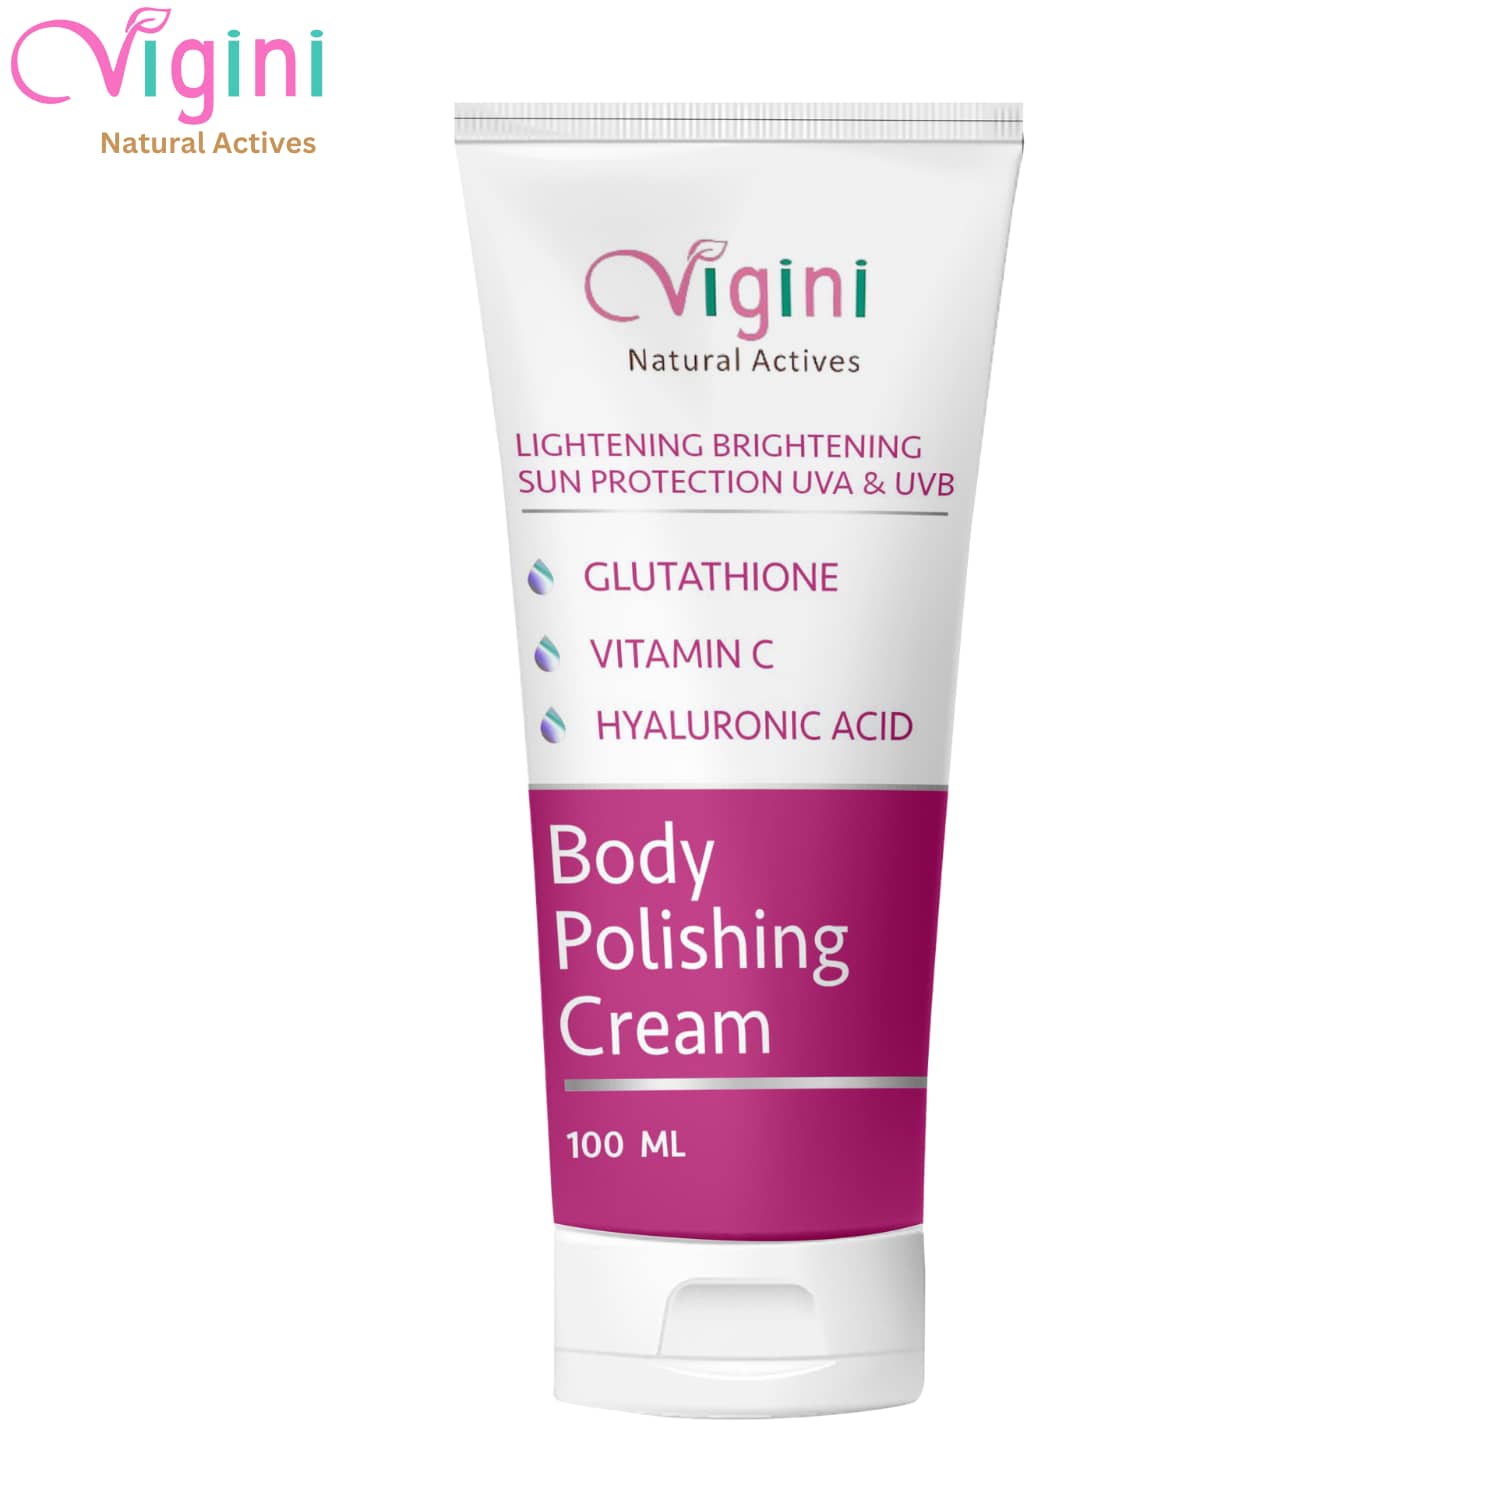 Vigini Skin Lightening Brightening Body Underarm Whitening  Glutathione Vitamin C Hyaluronic Acid  Sun Protection Cream